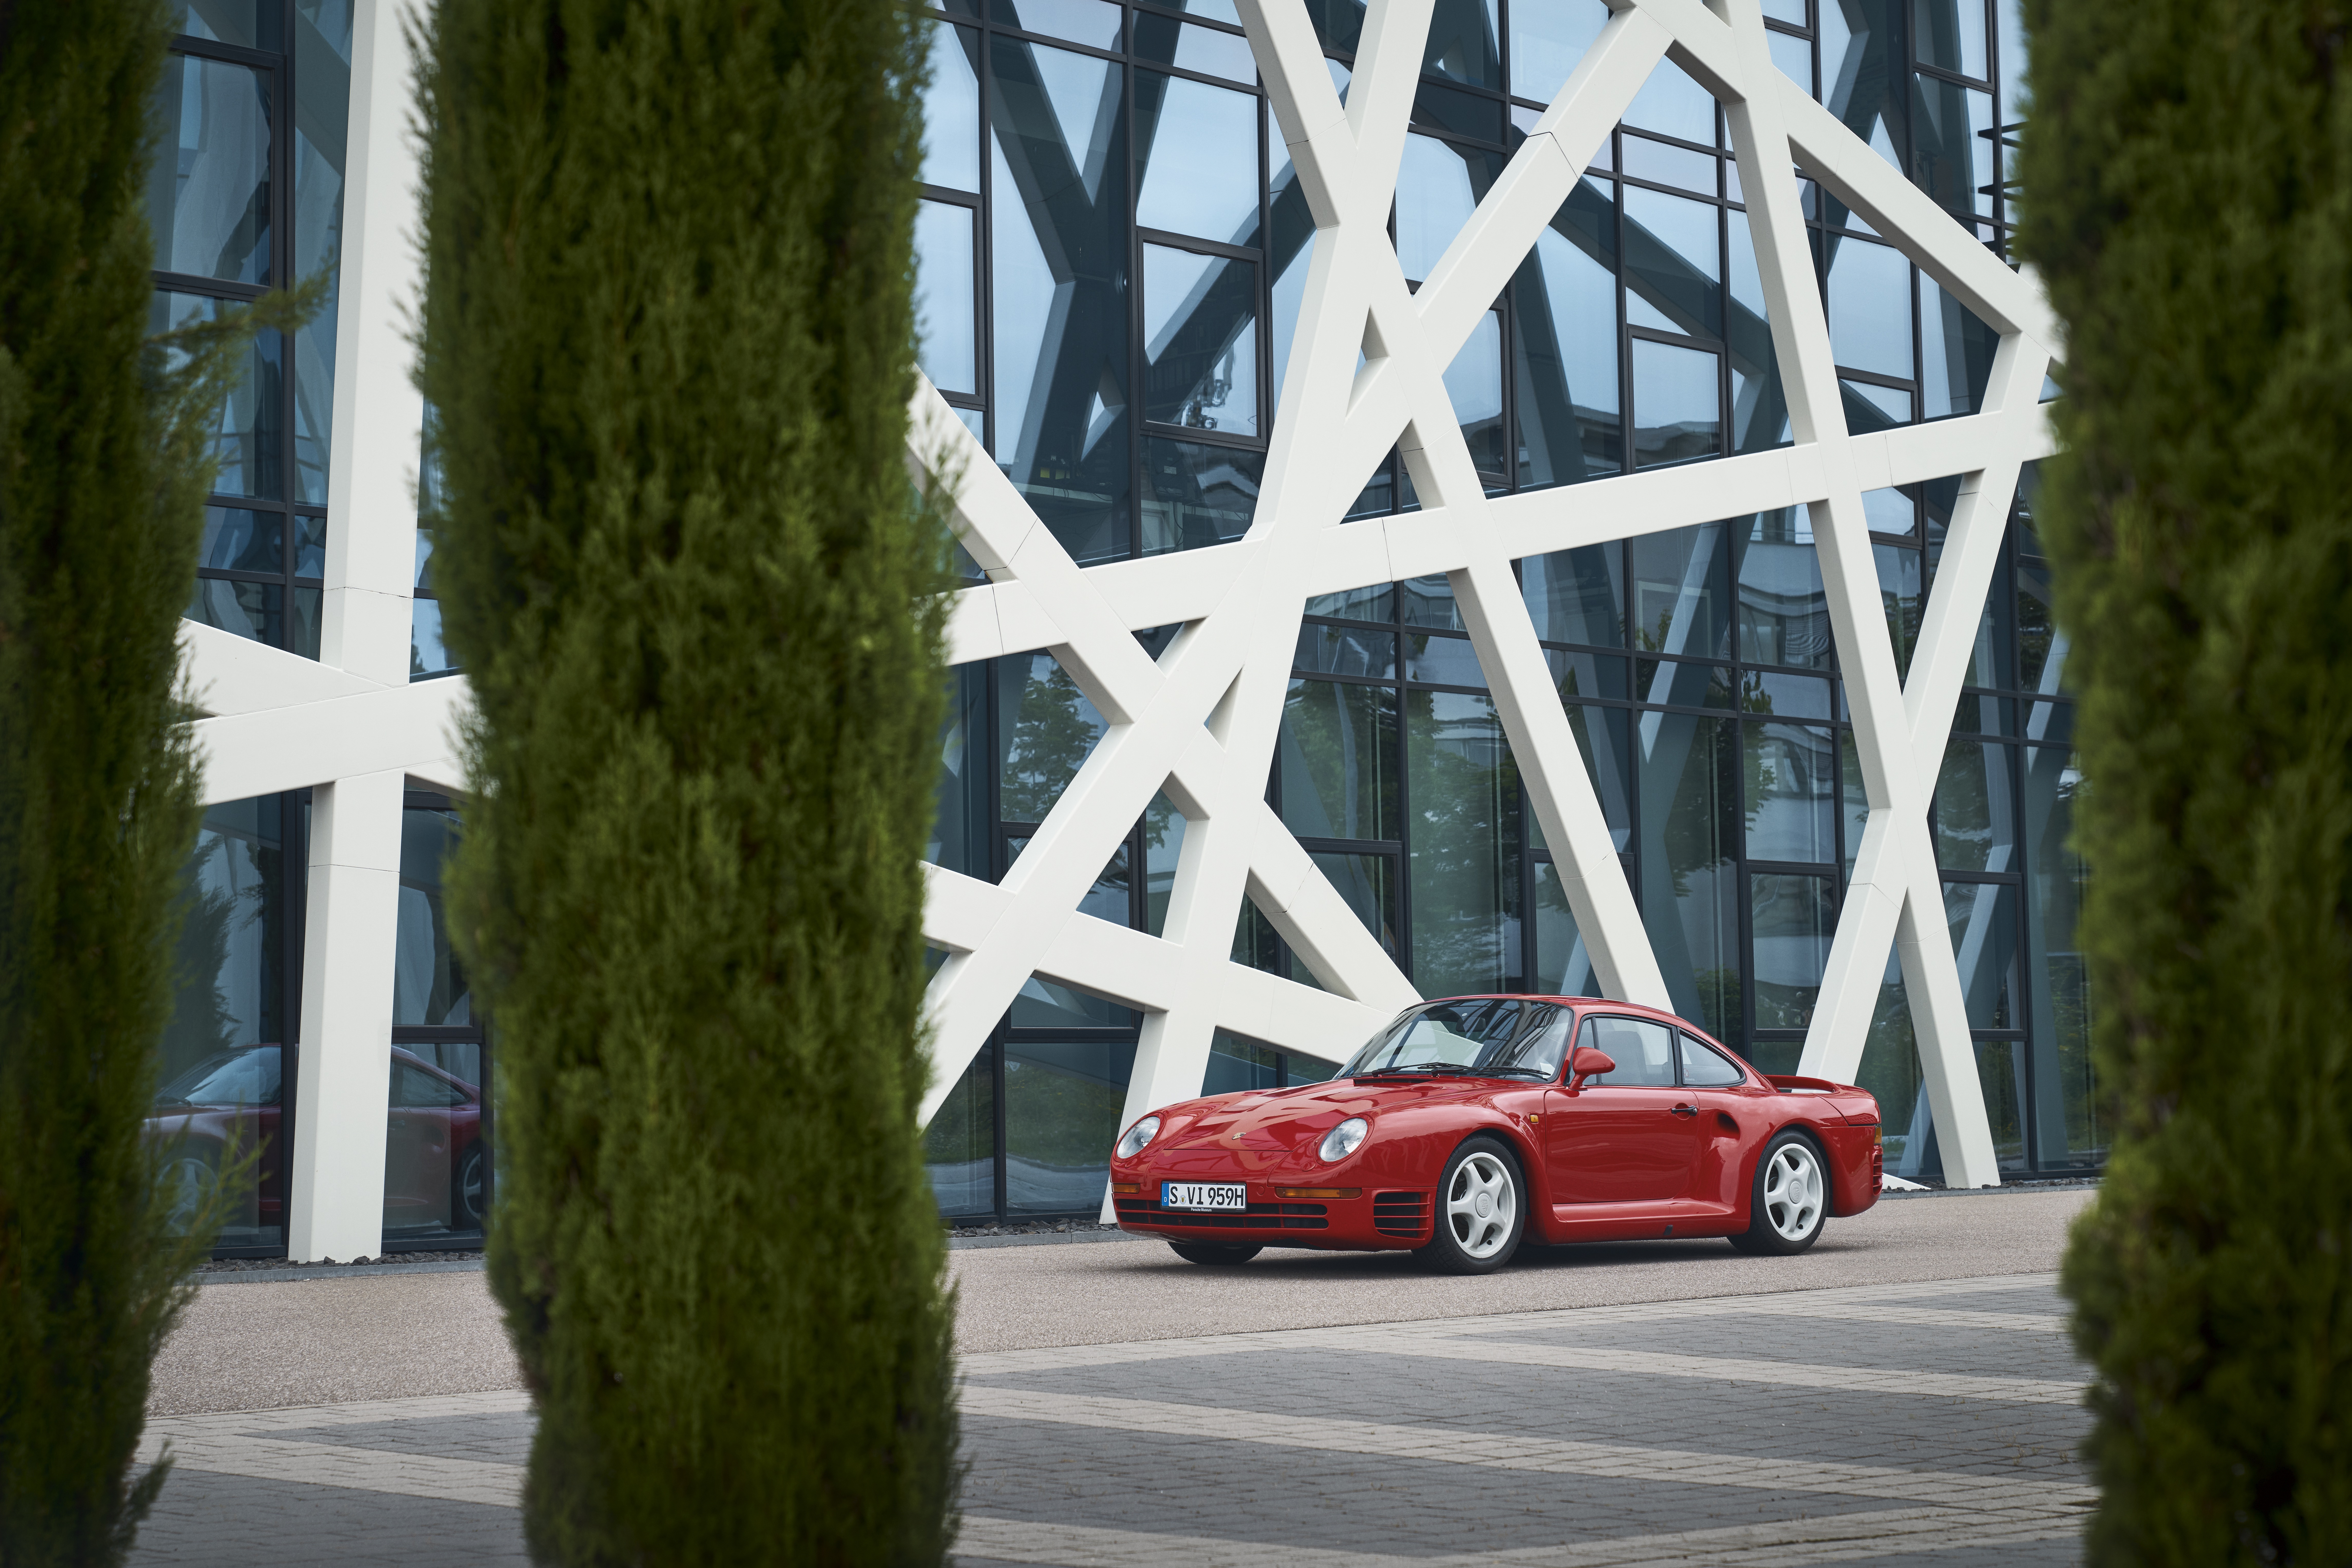 Red Porsche 959 outside an office building